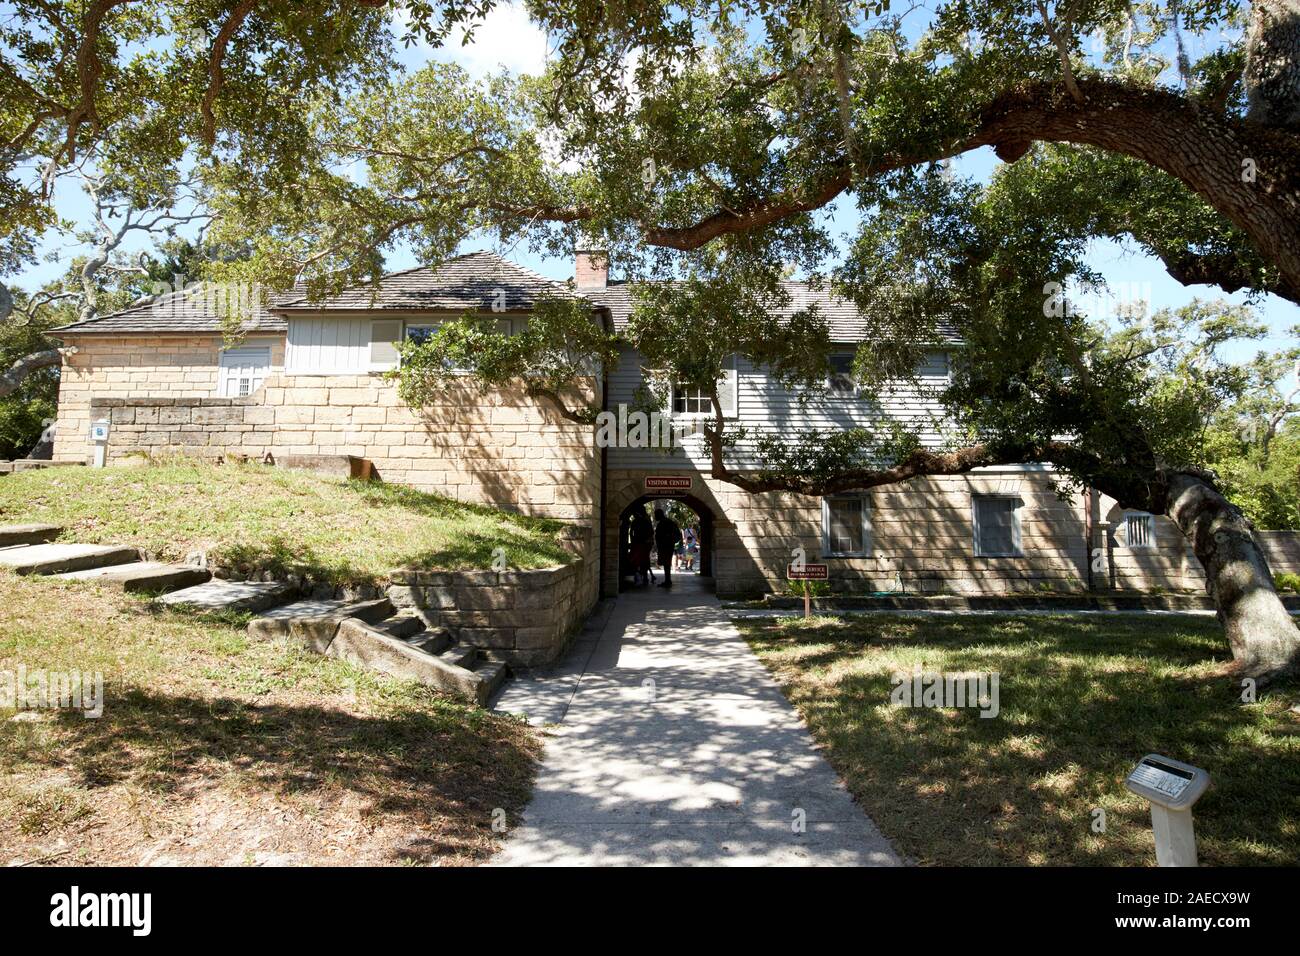 Fort matanzas national monument visitors center florida usa Banque D'Images